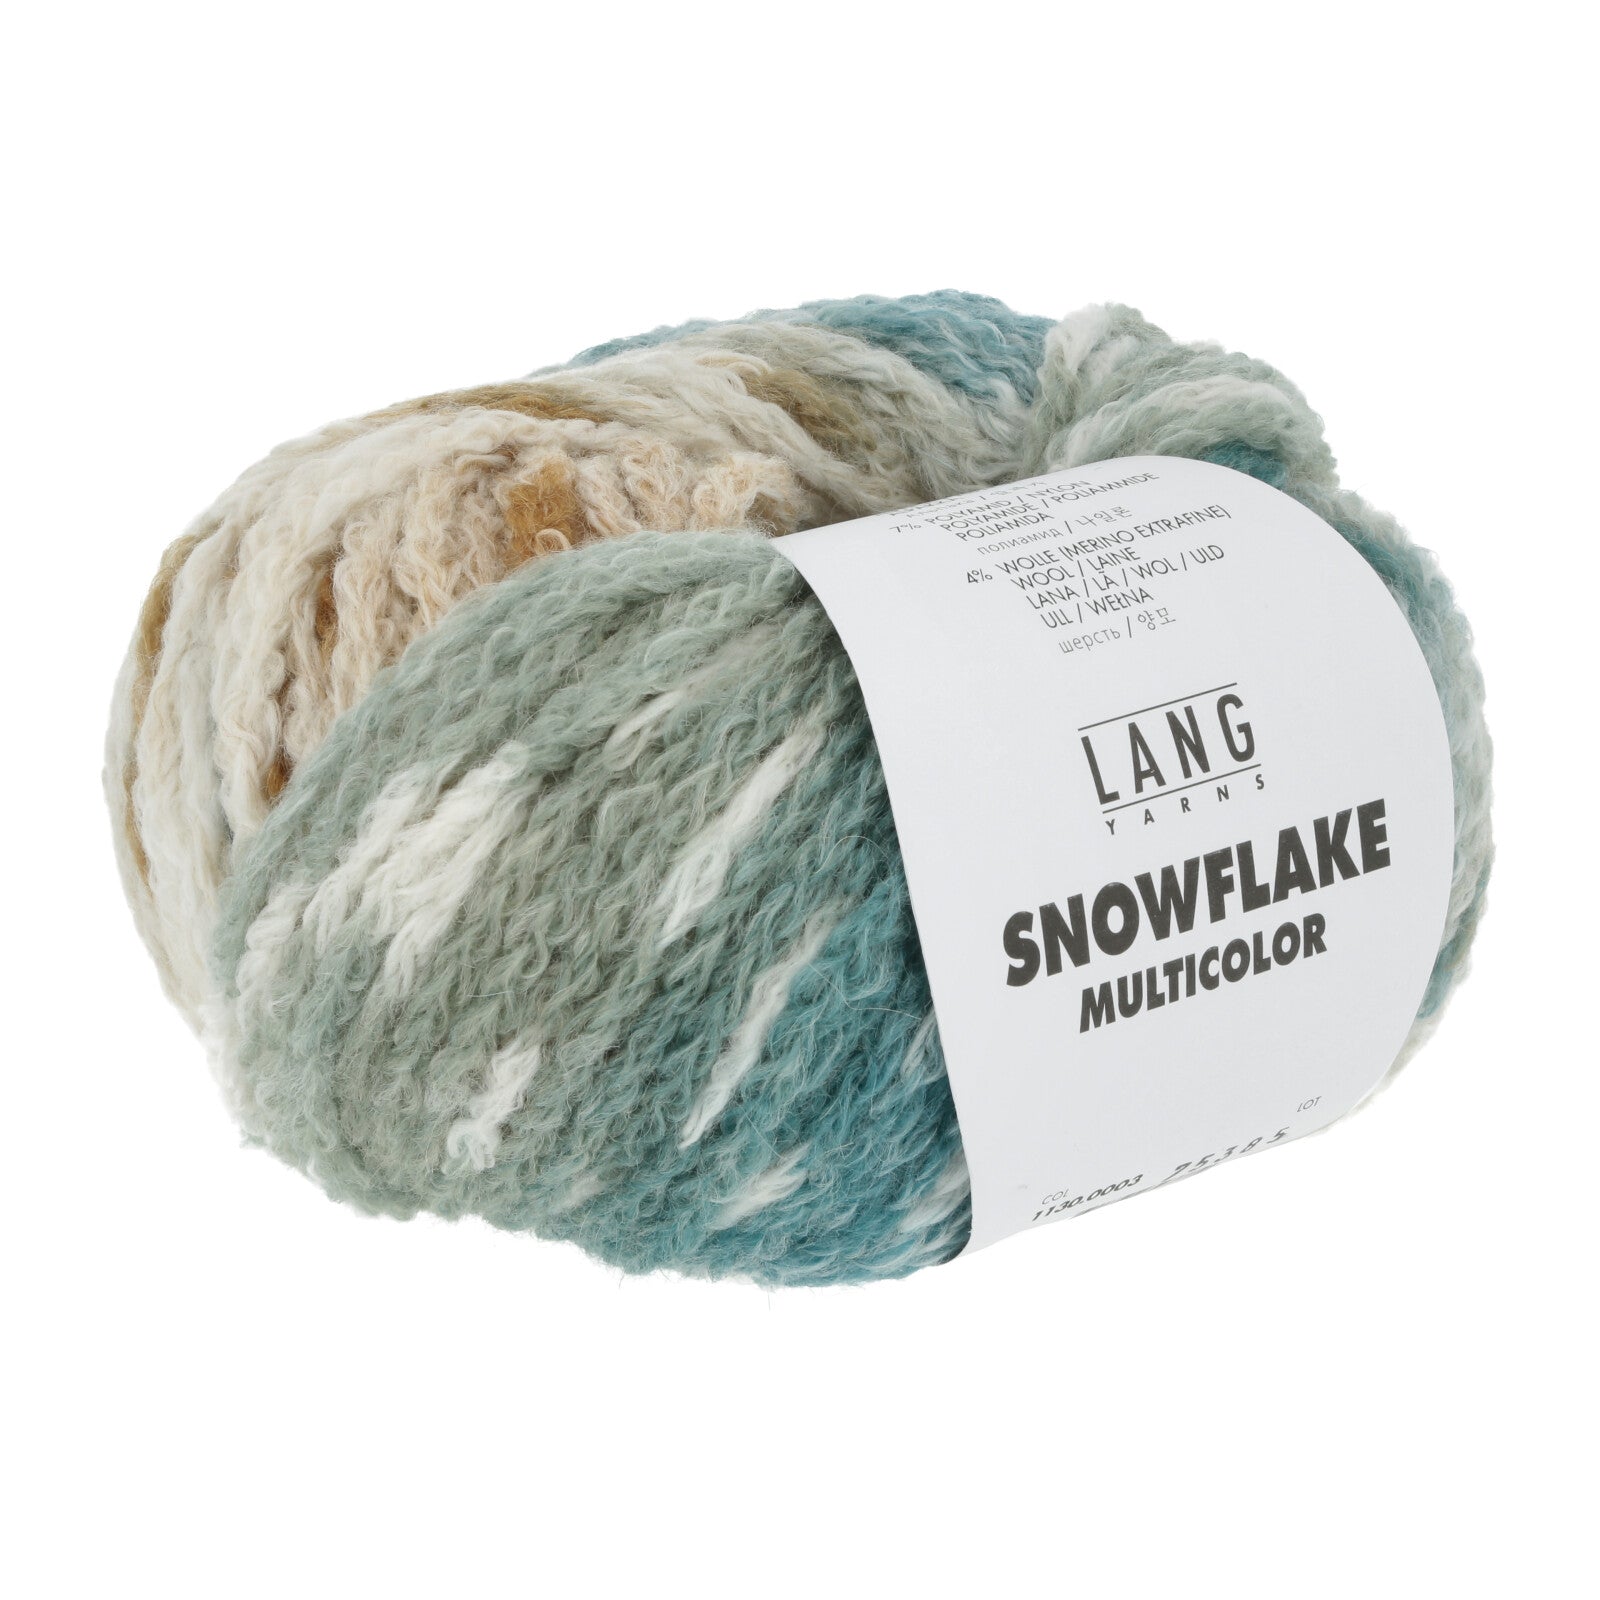 Lang Snowflake Multicolor in Lakeshore